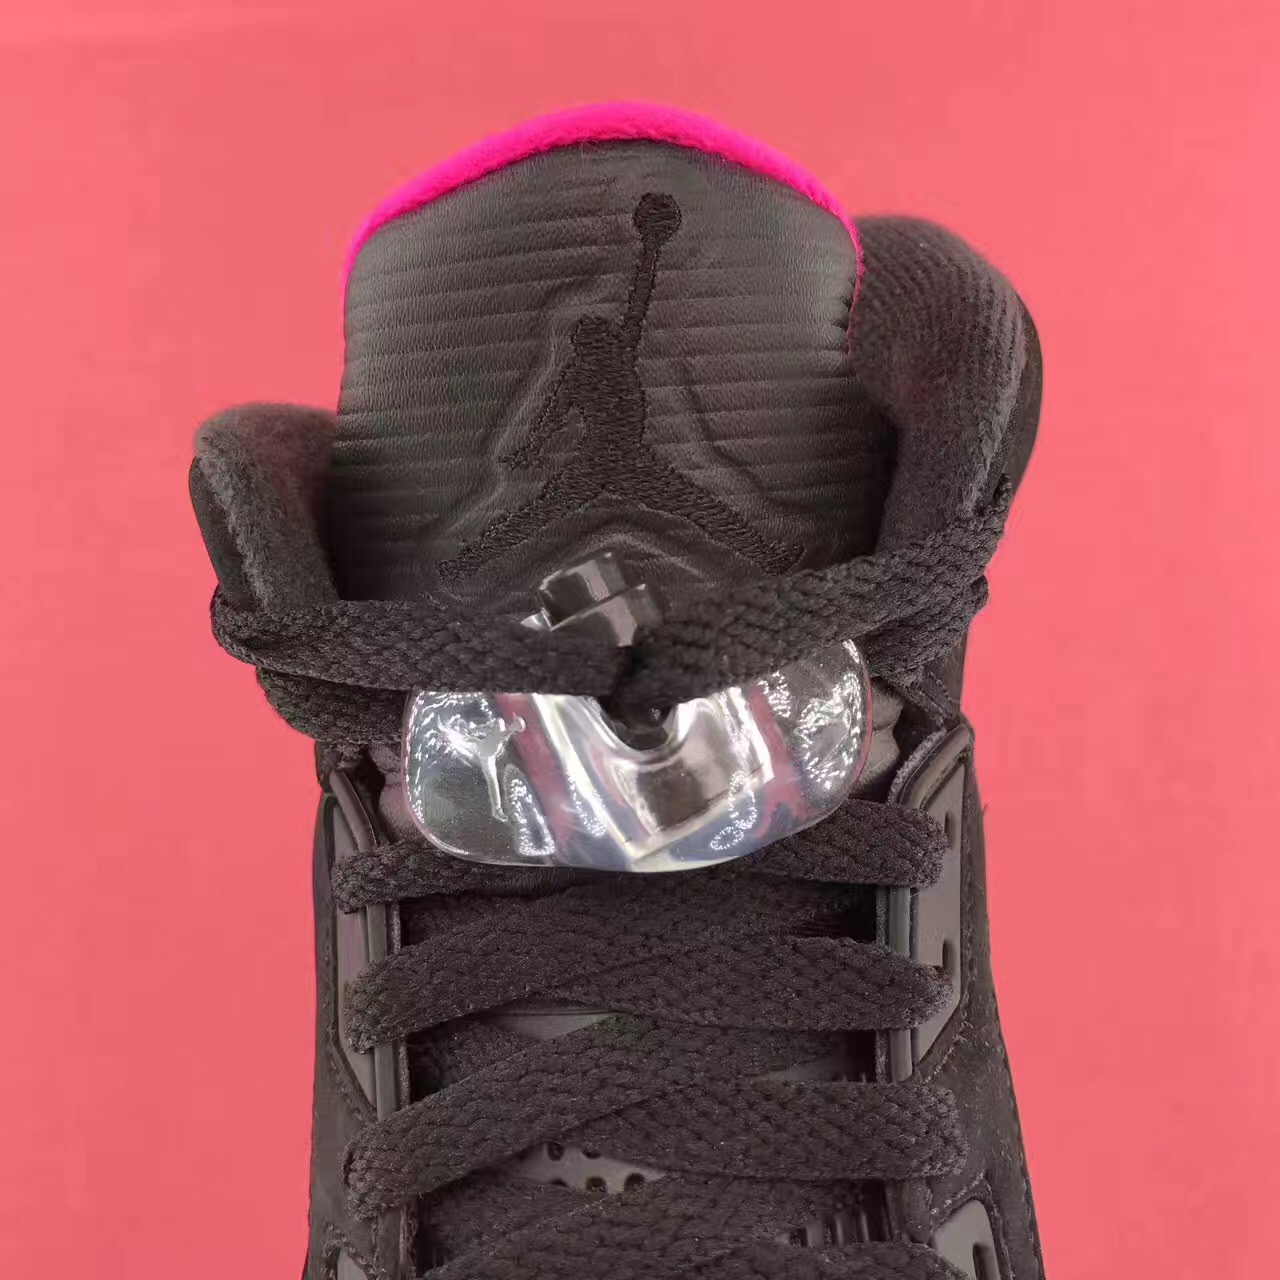 Air Jordan 5 Deadly Pink Release Date